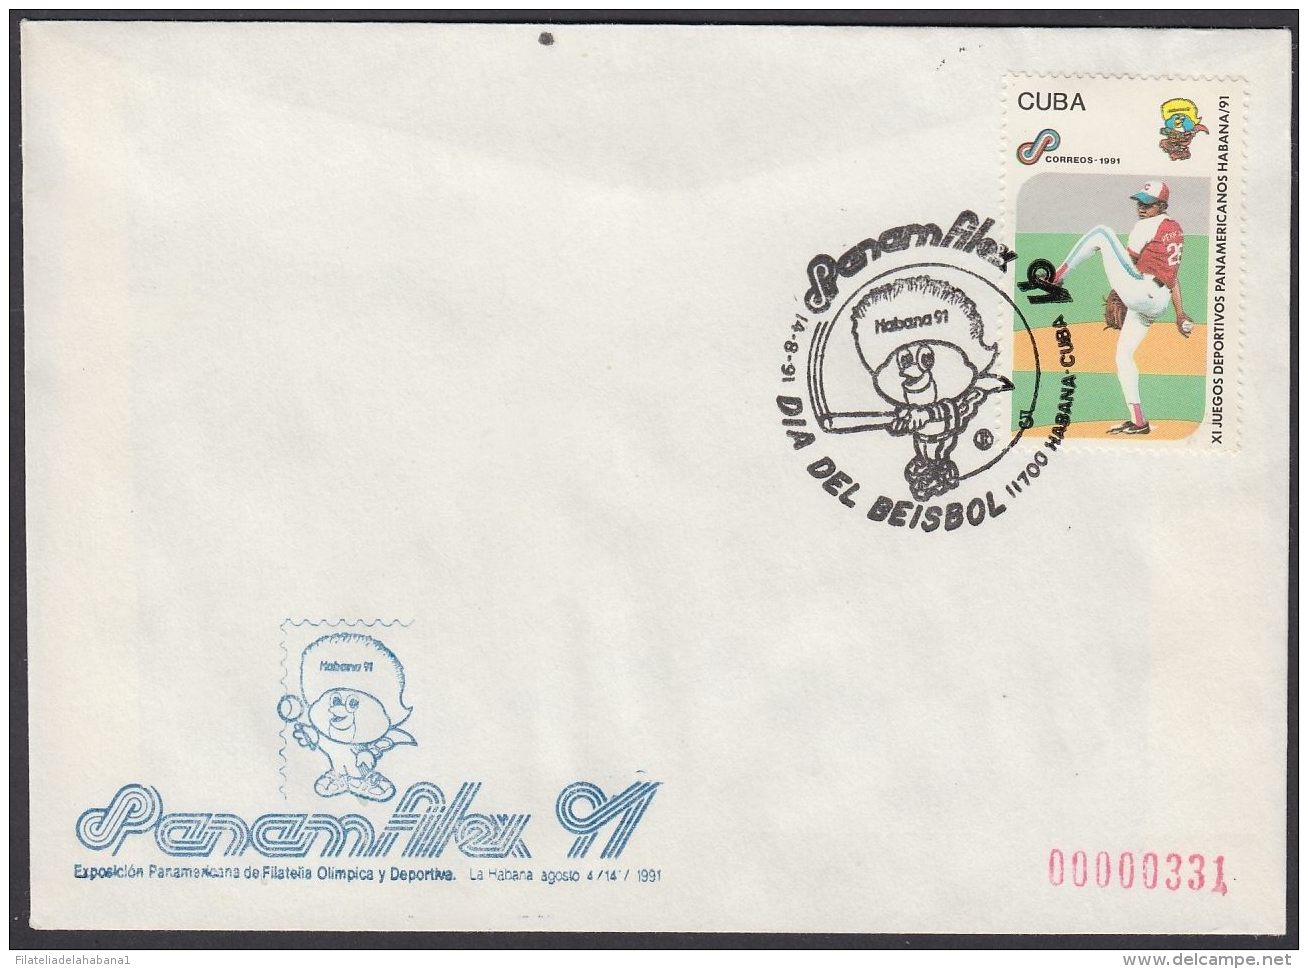 1991-CE-40 CUBA 1991 SPECIAL CANCEL. PANAMFILEX EXPO. DIA DEL BEISBOL. BASEBALL. - Covers & Documents